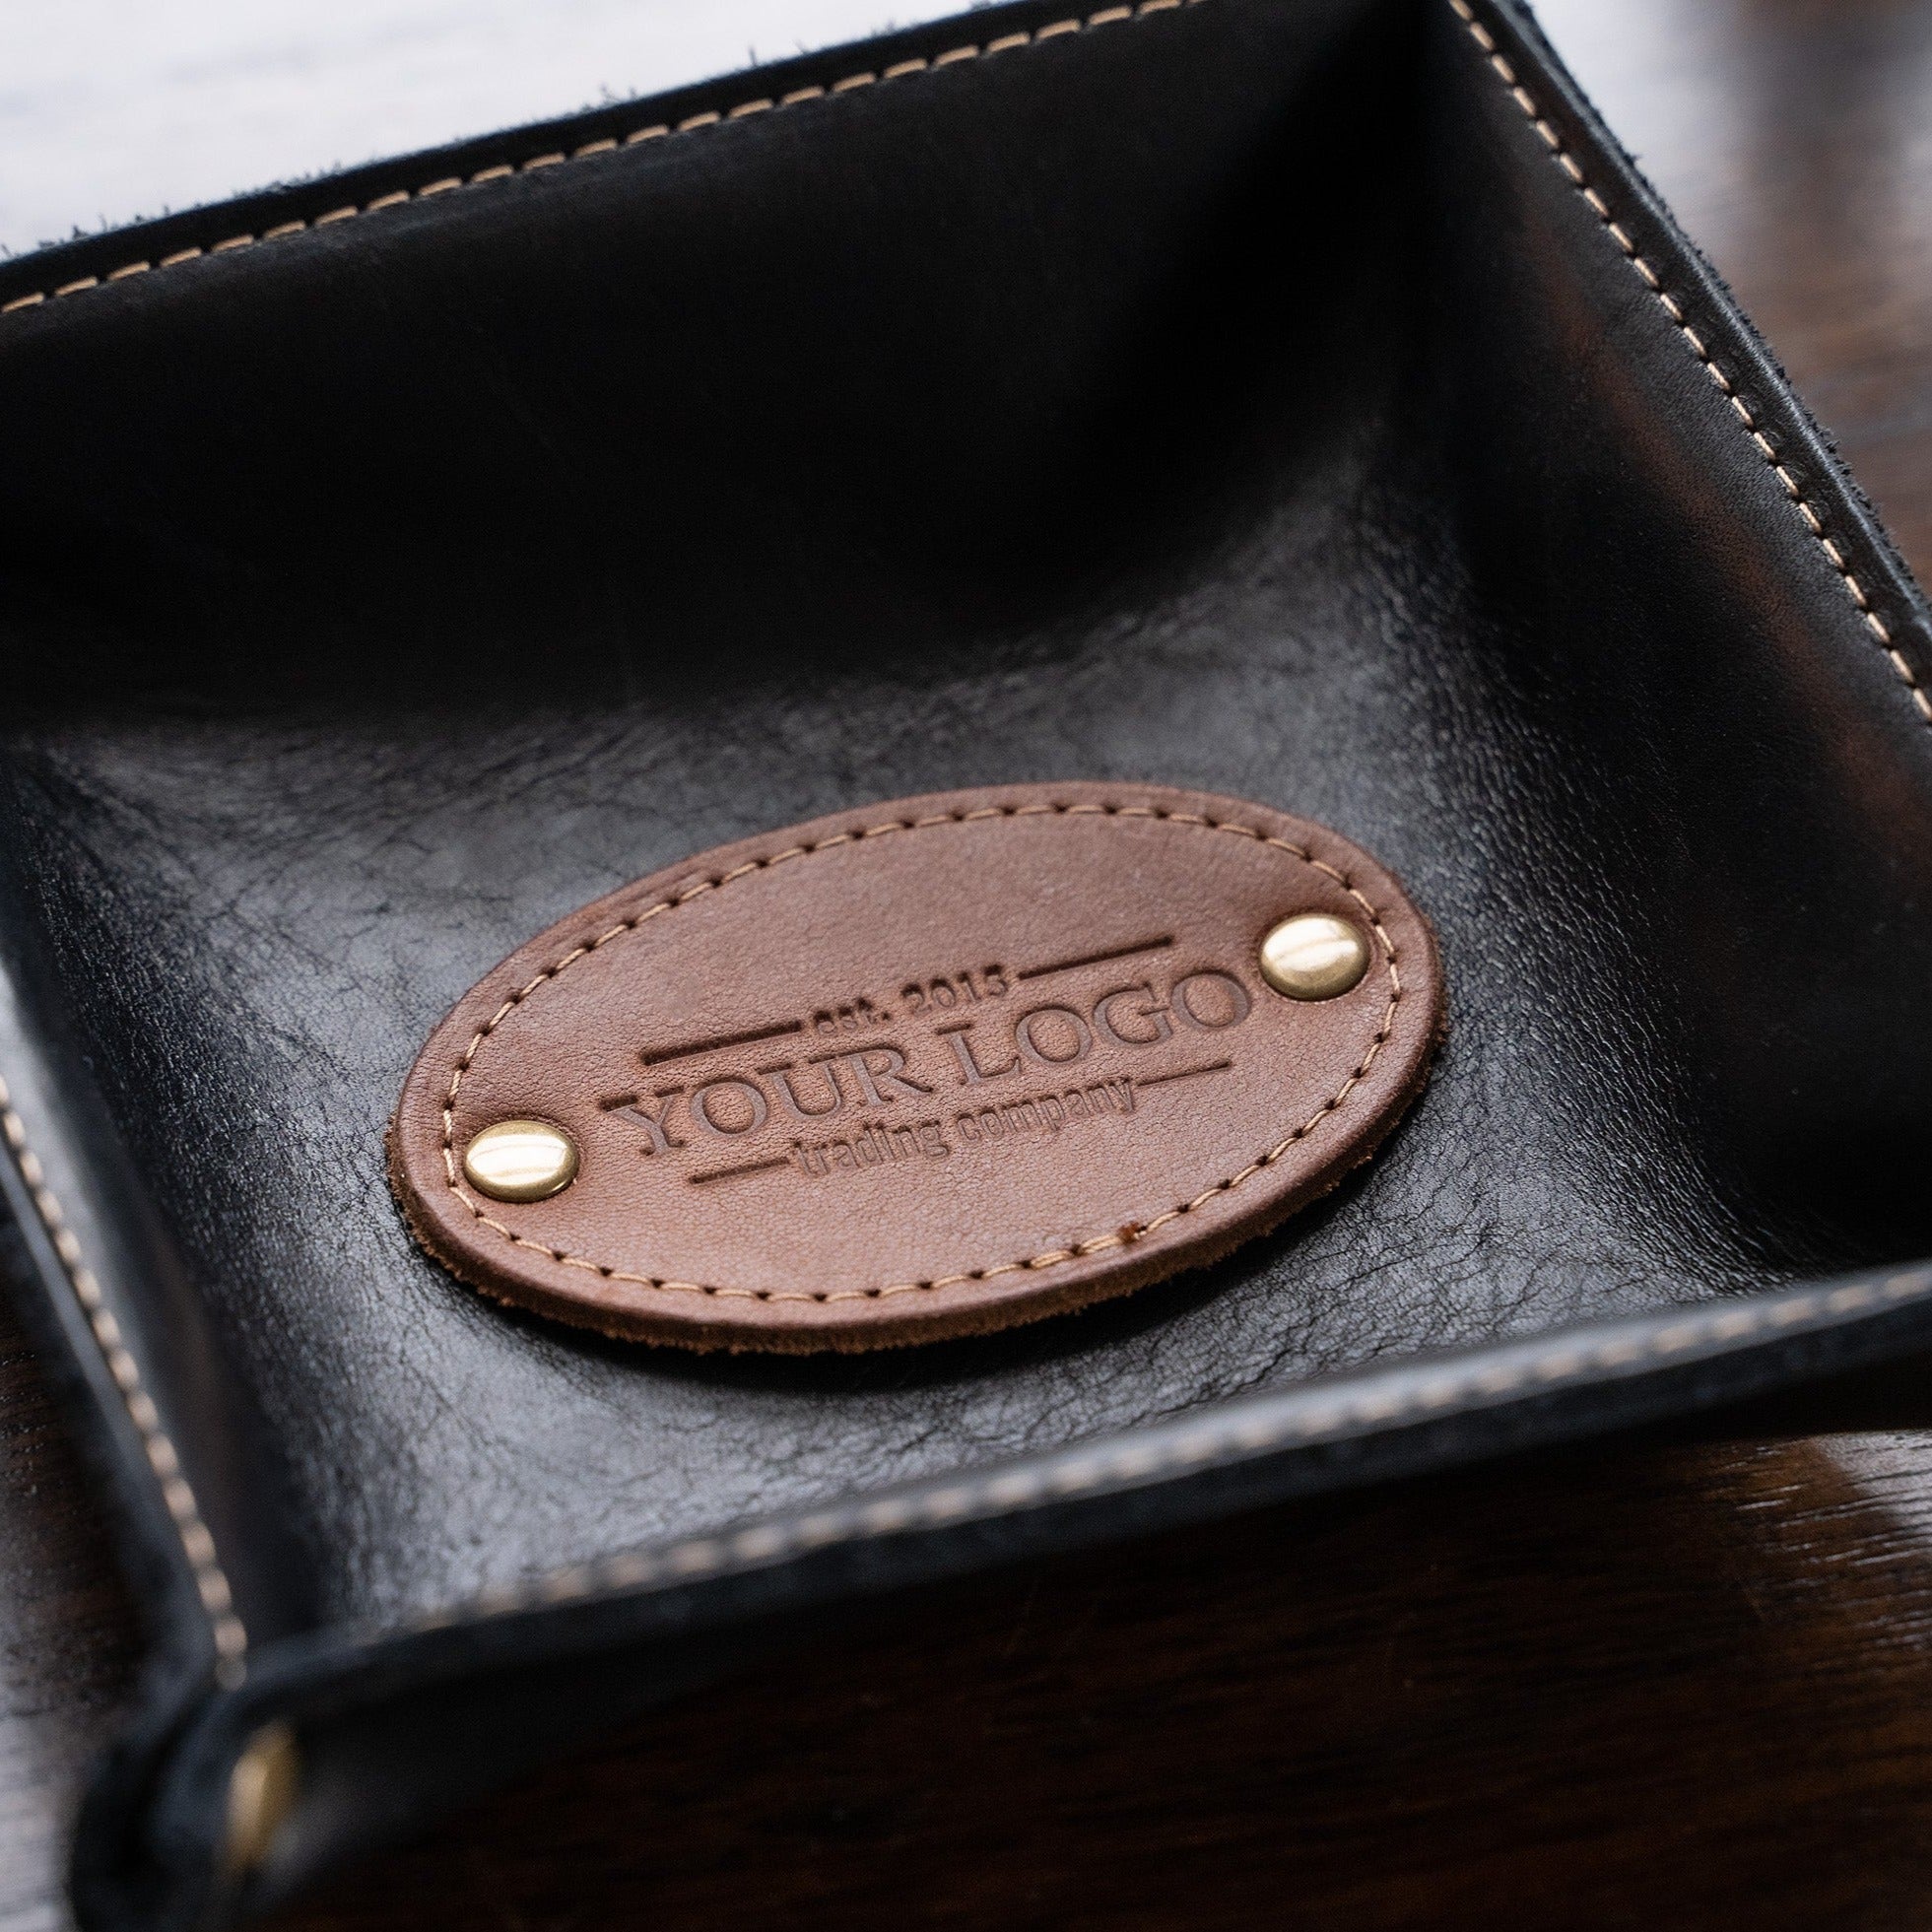 Genuine Leather Handmade Bags, Corporate Gifting